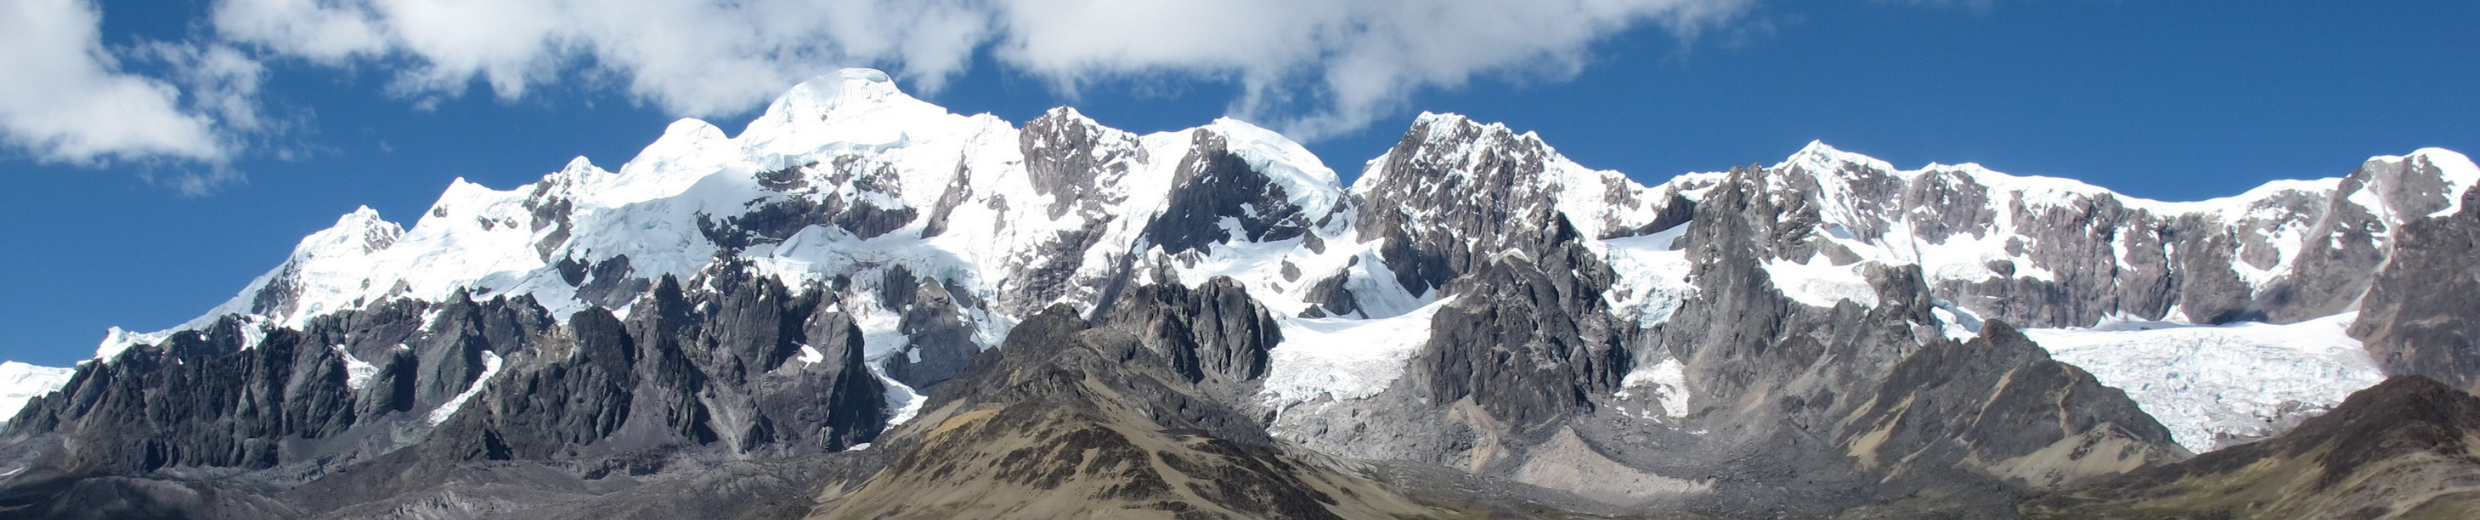 Peru snowy mountains